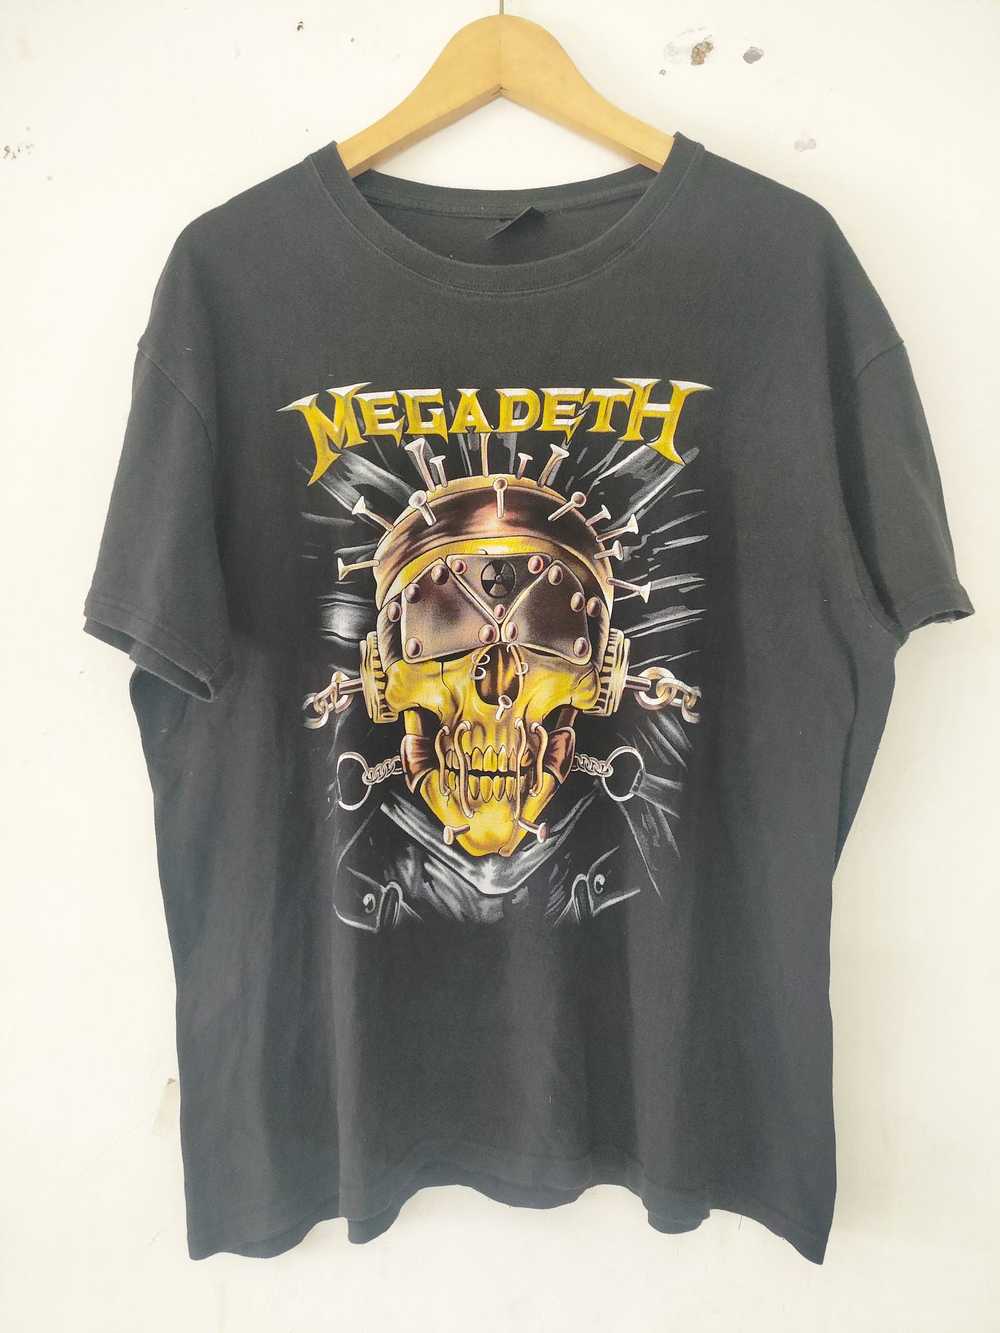 Band Tees × Megadeth × Rock Tees MEGADETH SHIRT - image 1